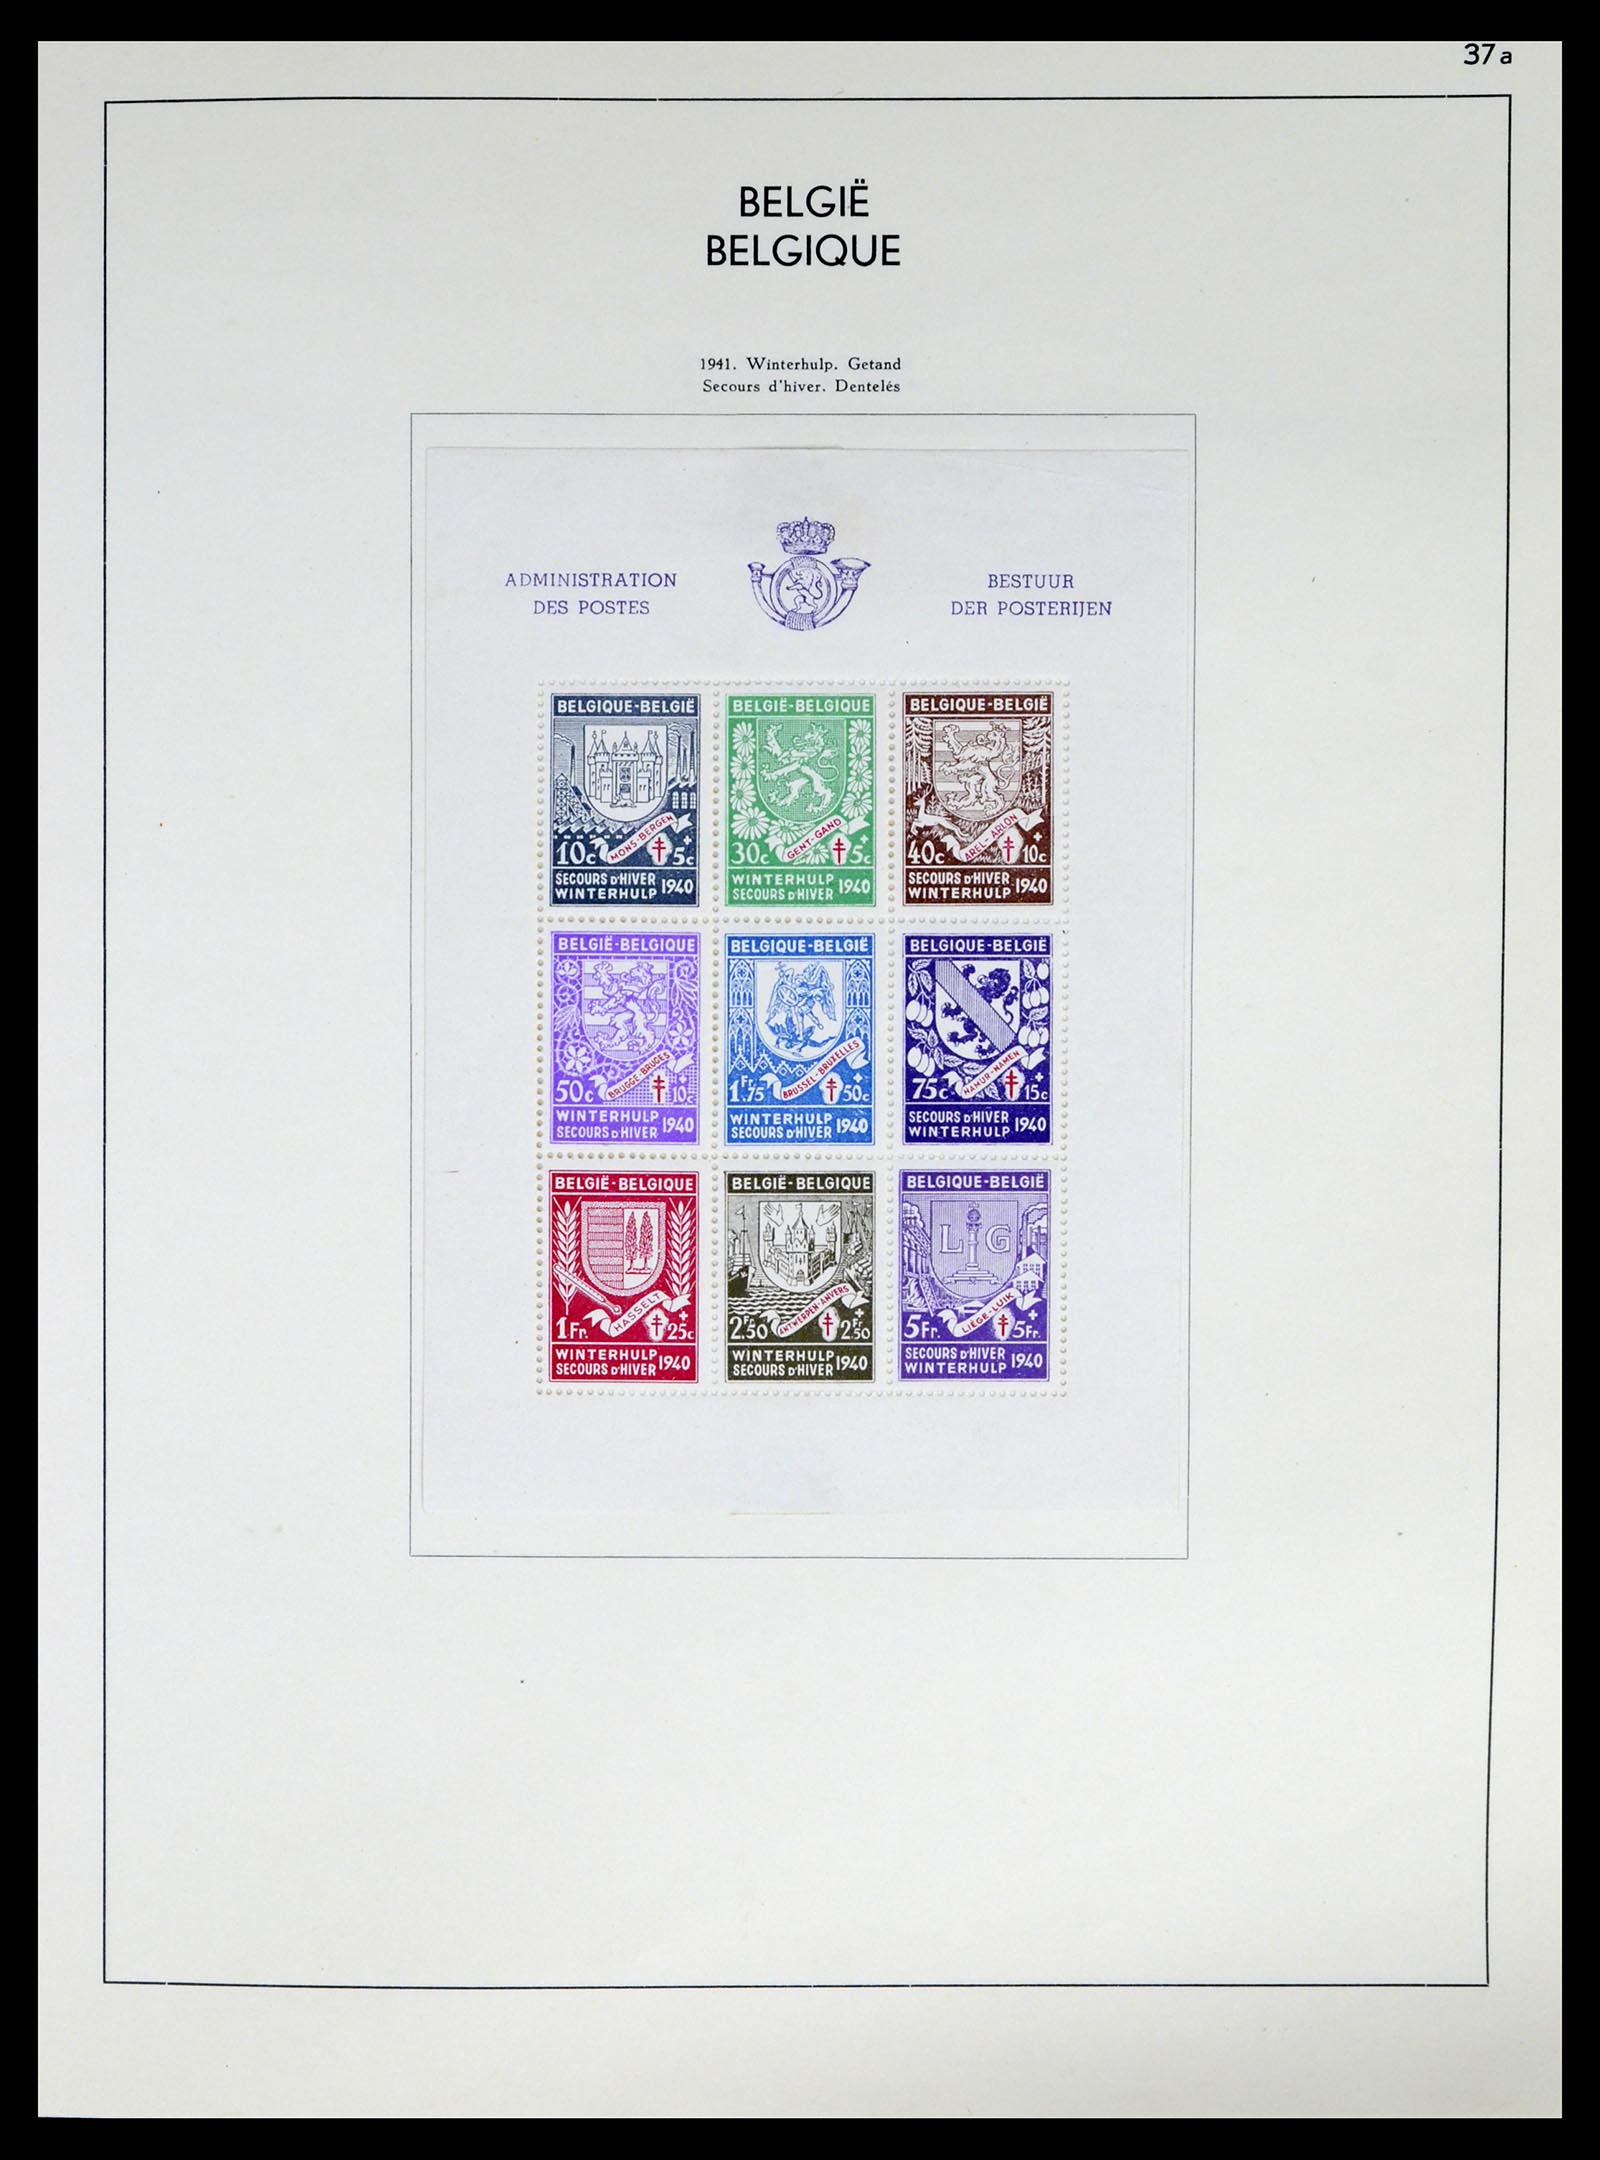 37959 048 - Stamp Collection 37959 Belgium and Belgian Congo 1849-1960.